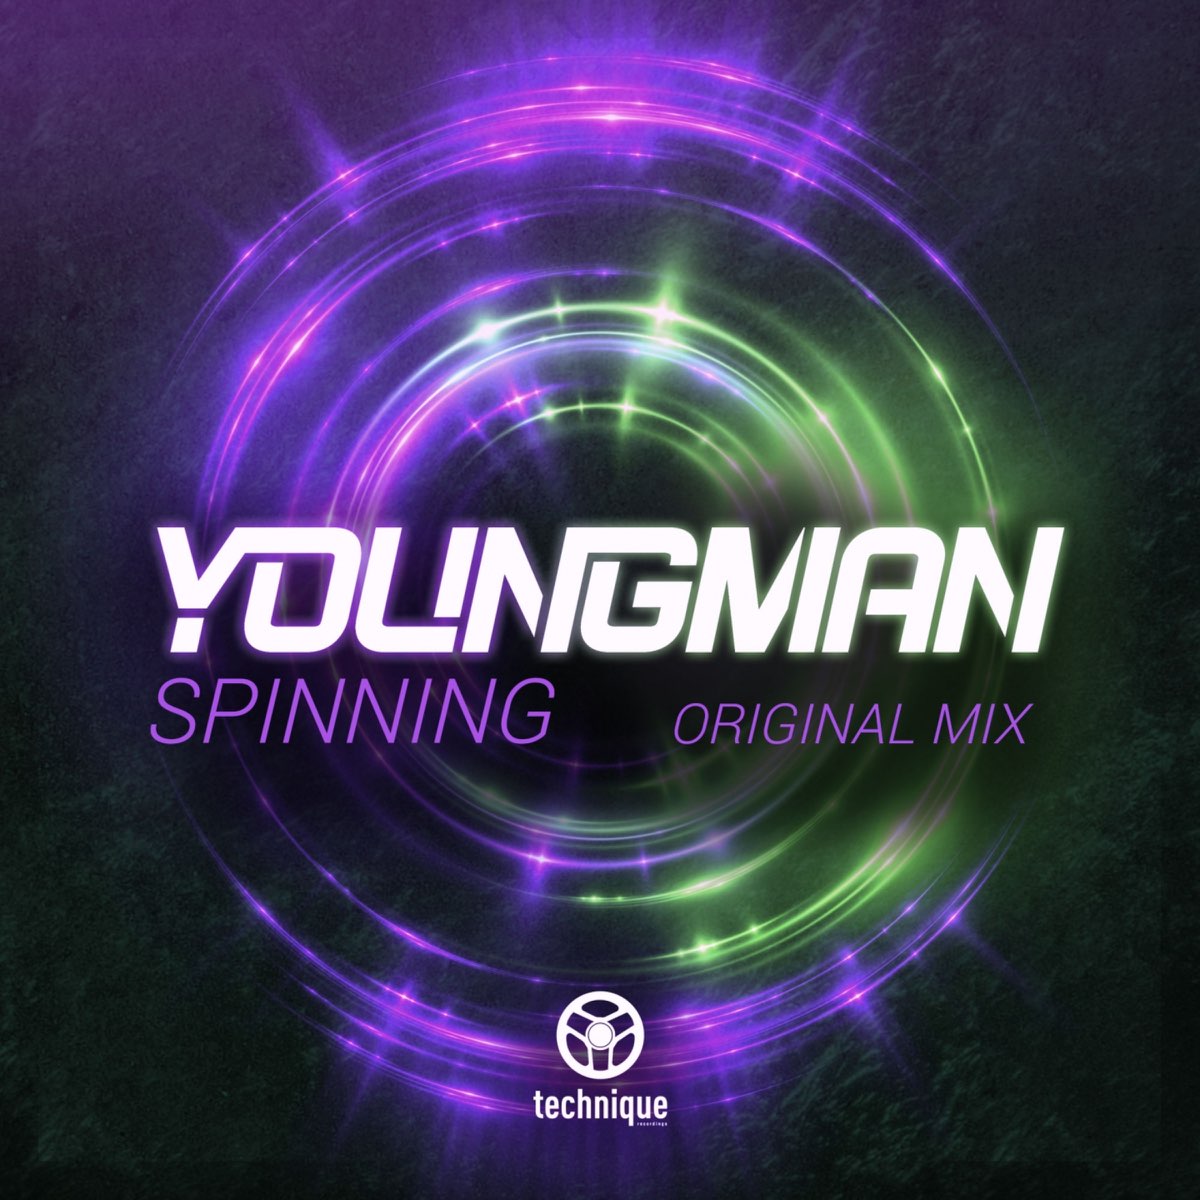 Spinning музыка. Spin музыка. World is Spinning мелодия. Technique recordings. Youngman песня.